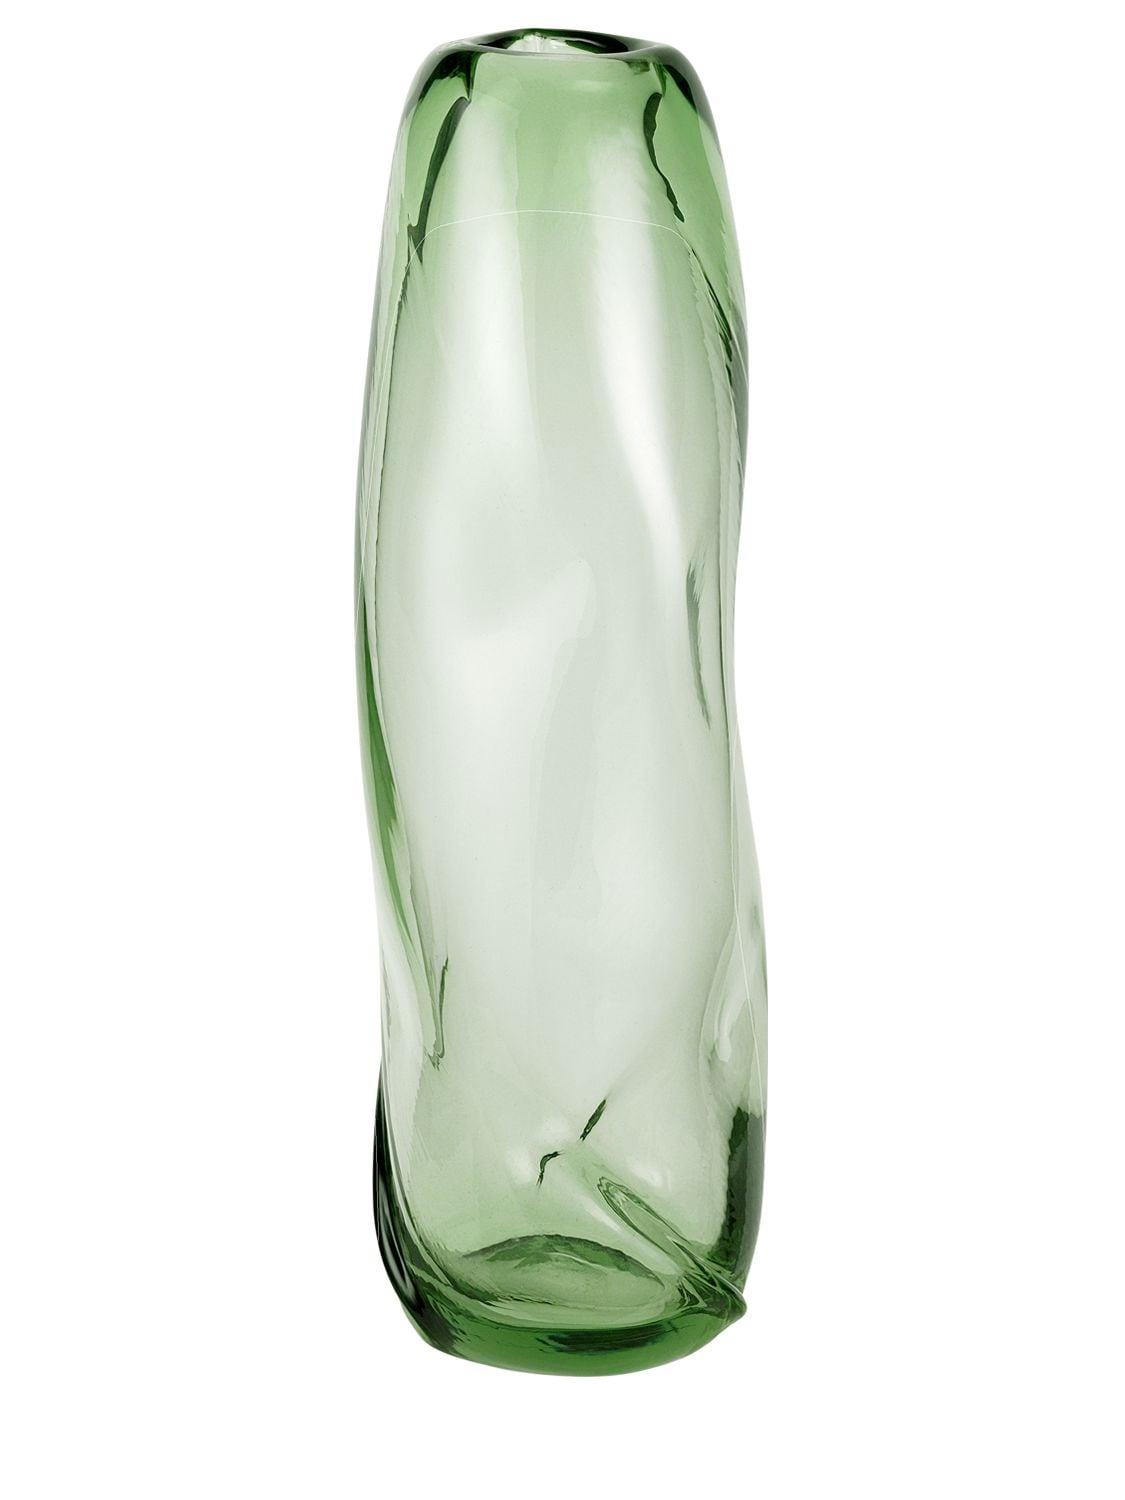 FERM LIVING WATER SWIRL MOUTHBLOWN GLASS VASE,75I0VR026-UKVDWUNMRUQGR0XBU1M1